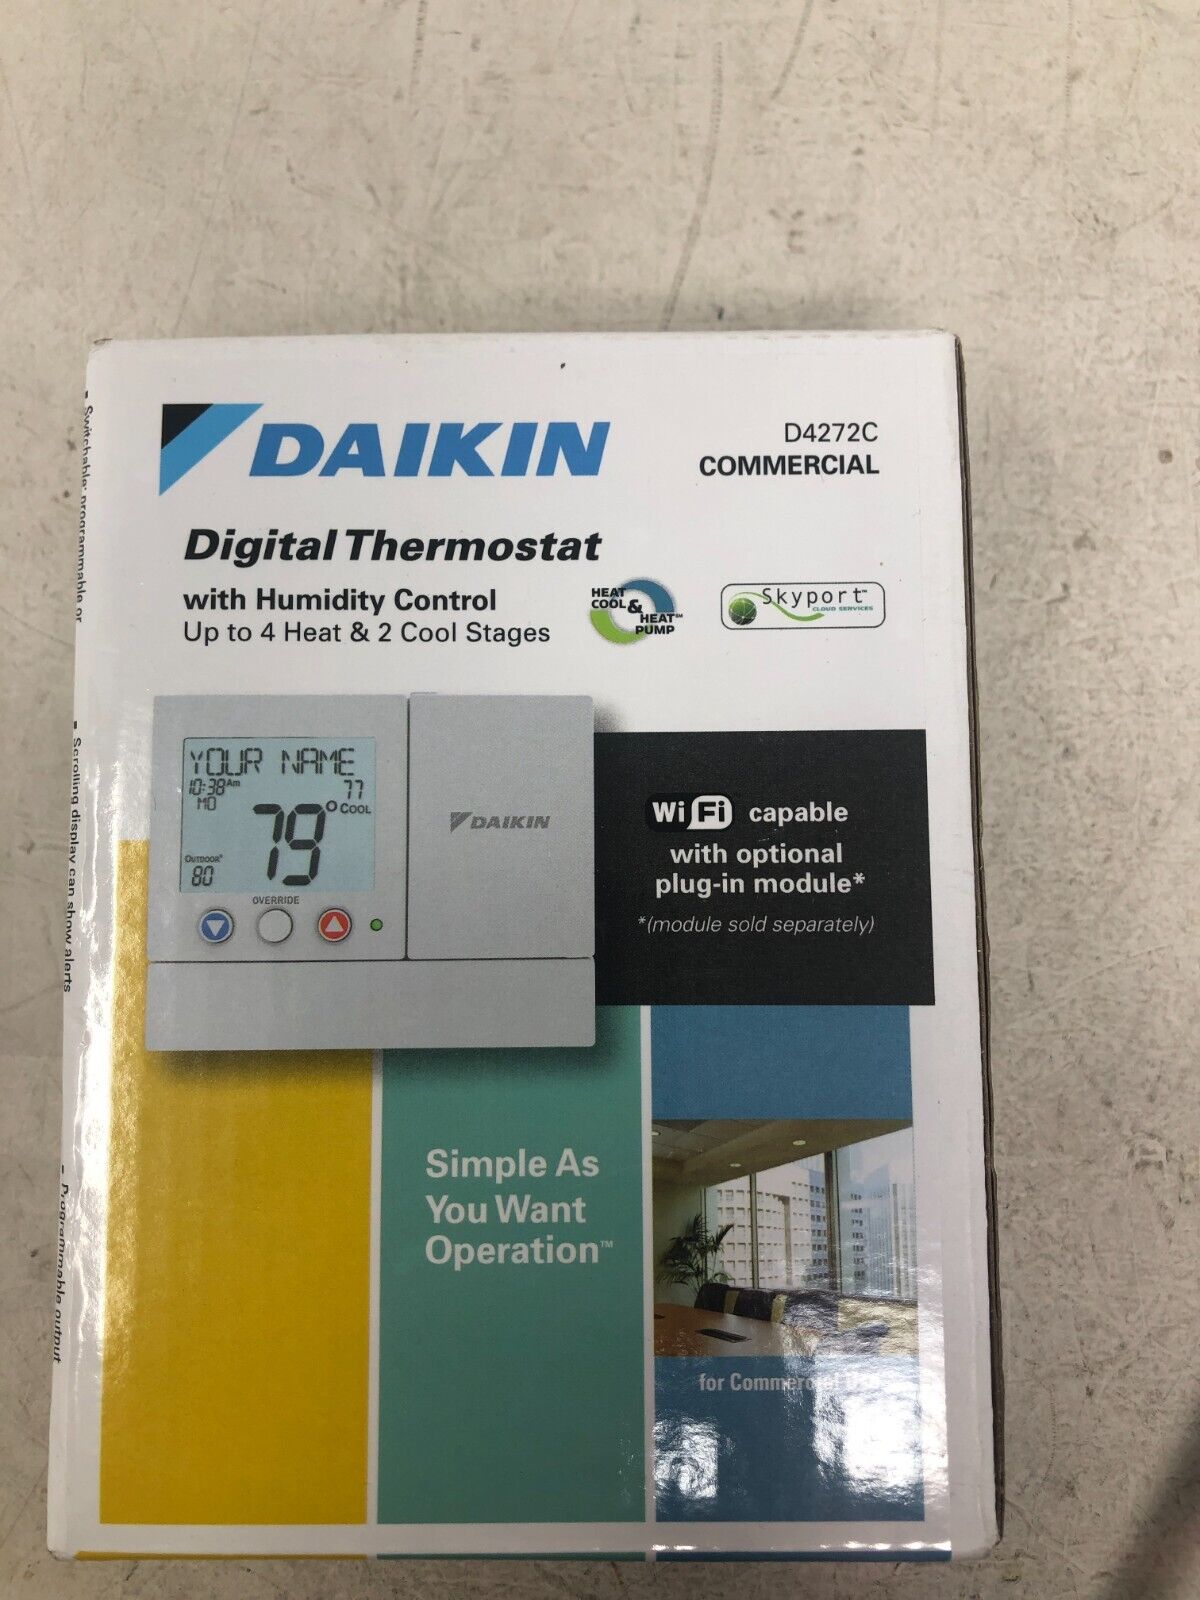 Daikin Commercial Digital Thermostat D4272C